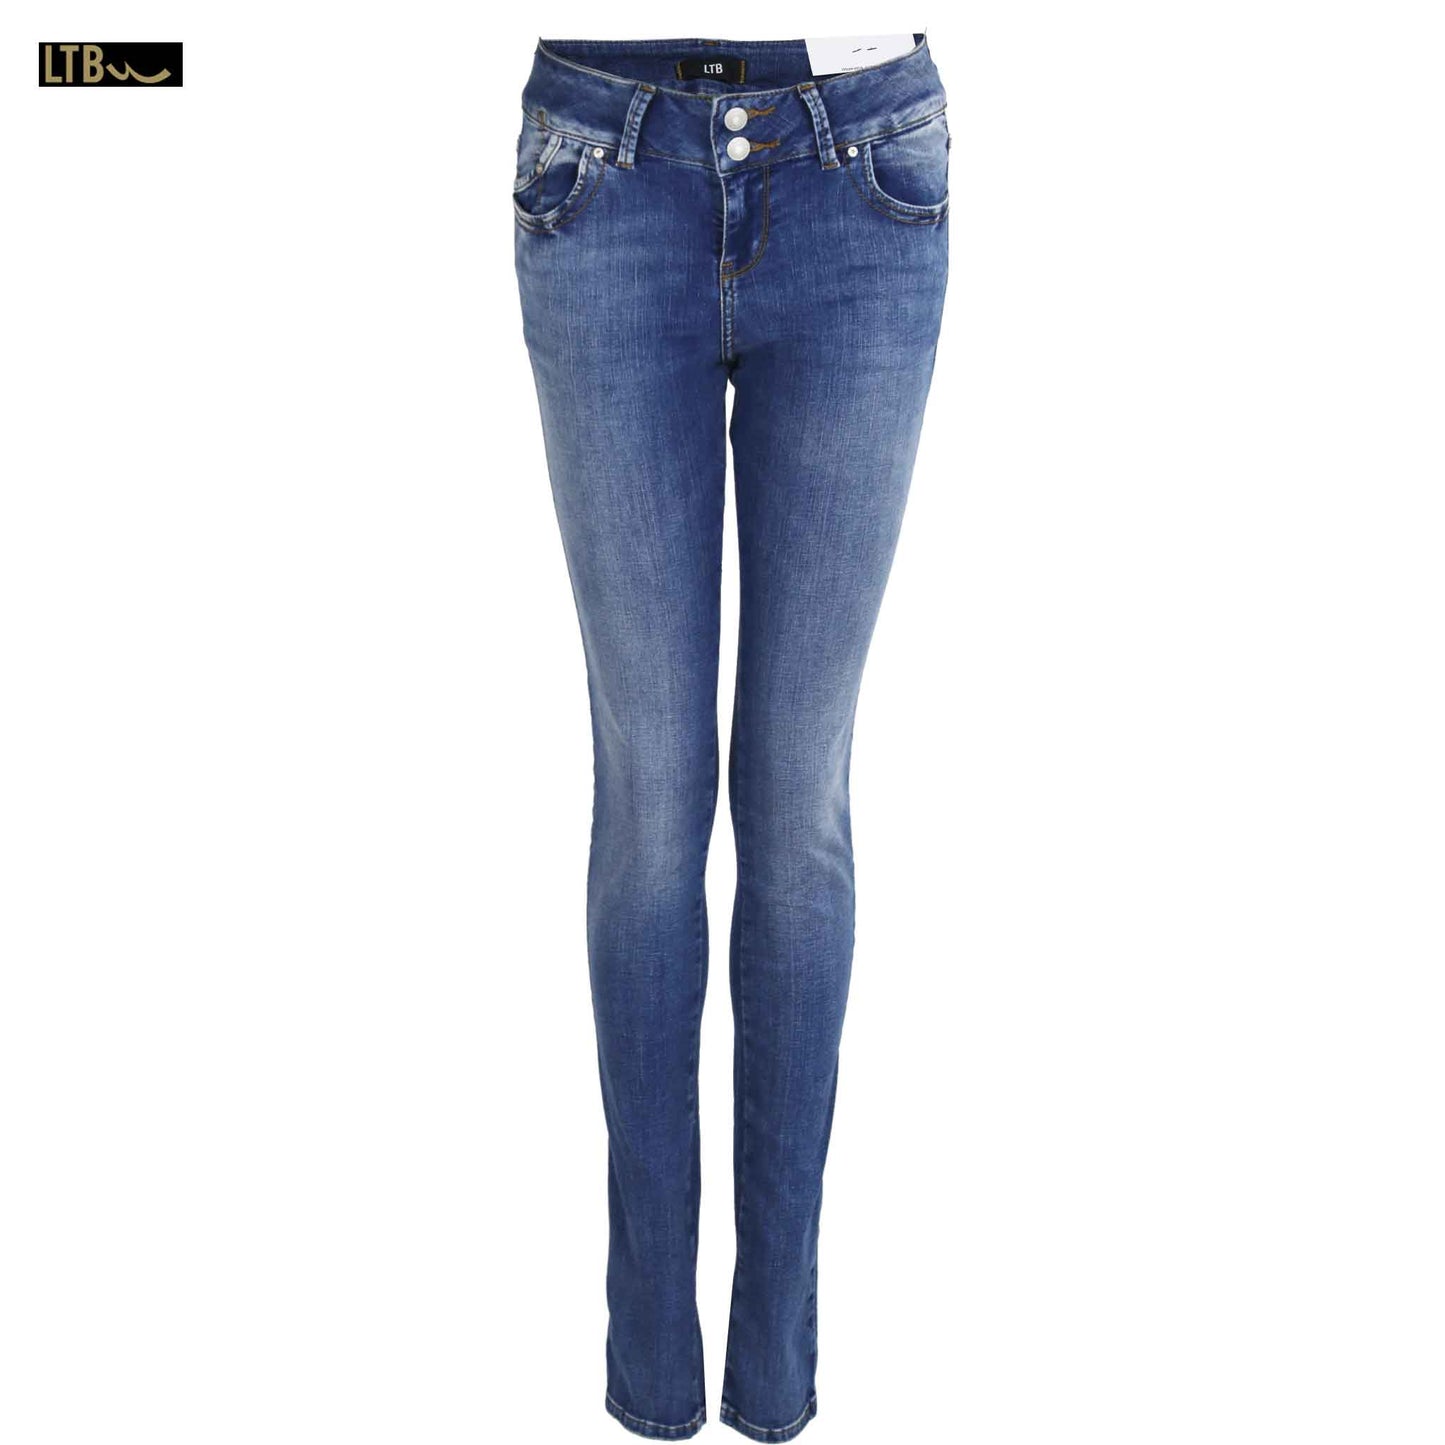 clothing tall women ltb jeans molly m bella undamaged